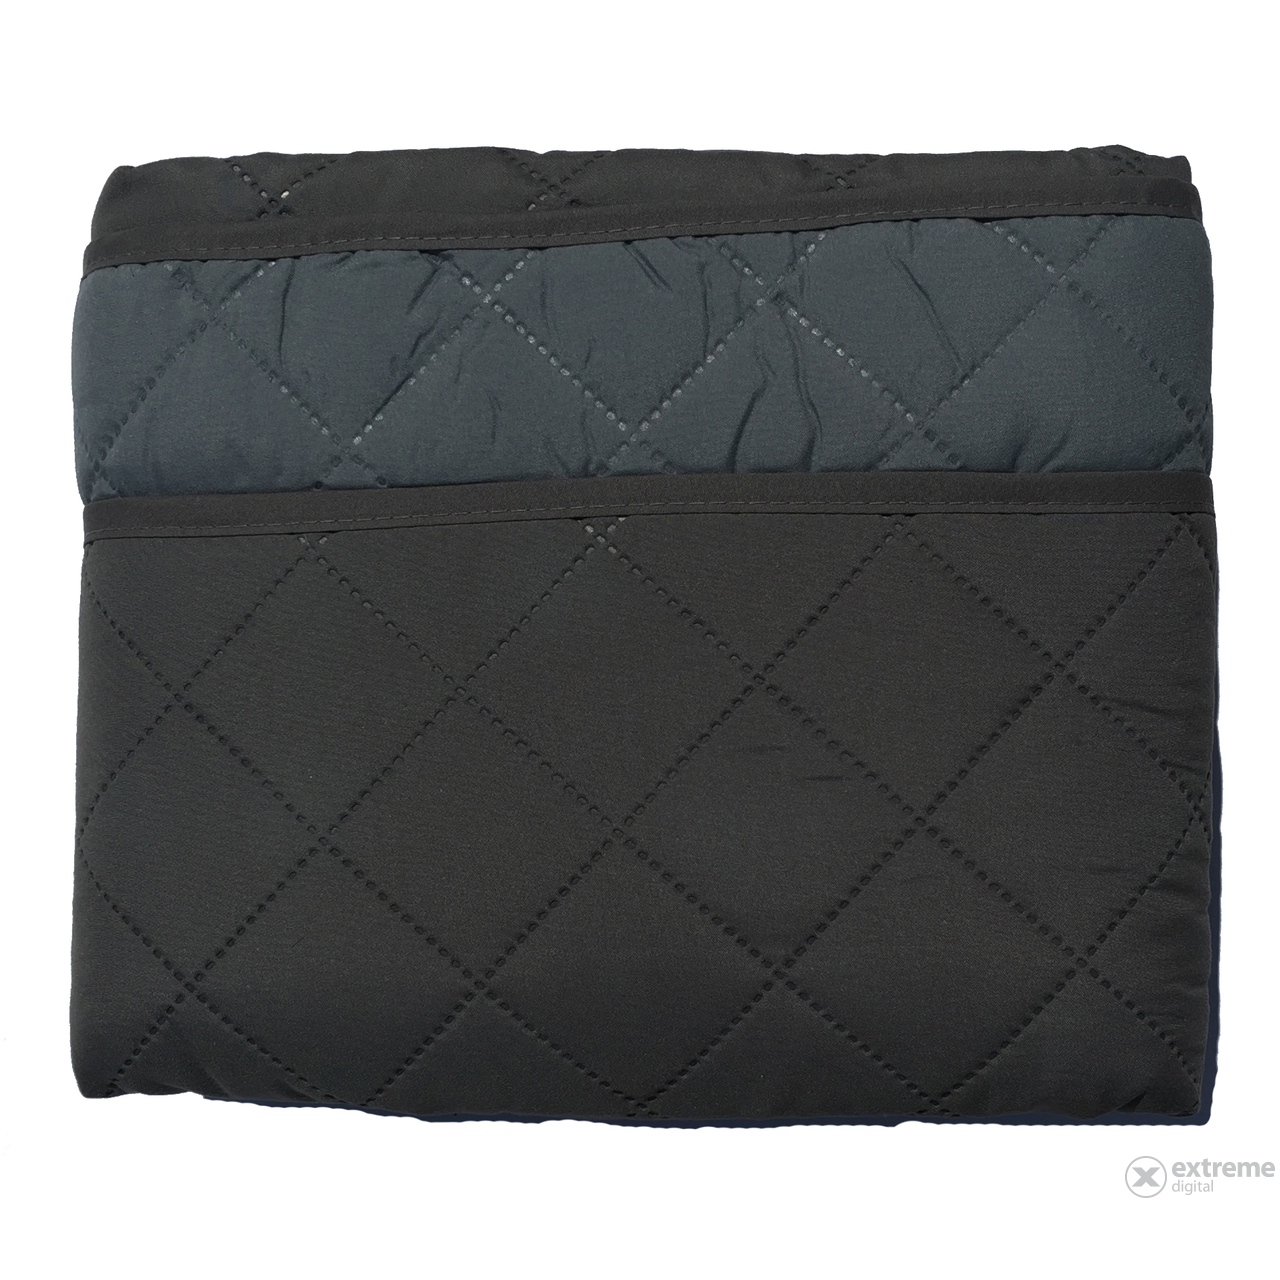 Zamur széktakaró, fekete/antracit (191x165cm)